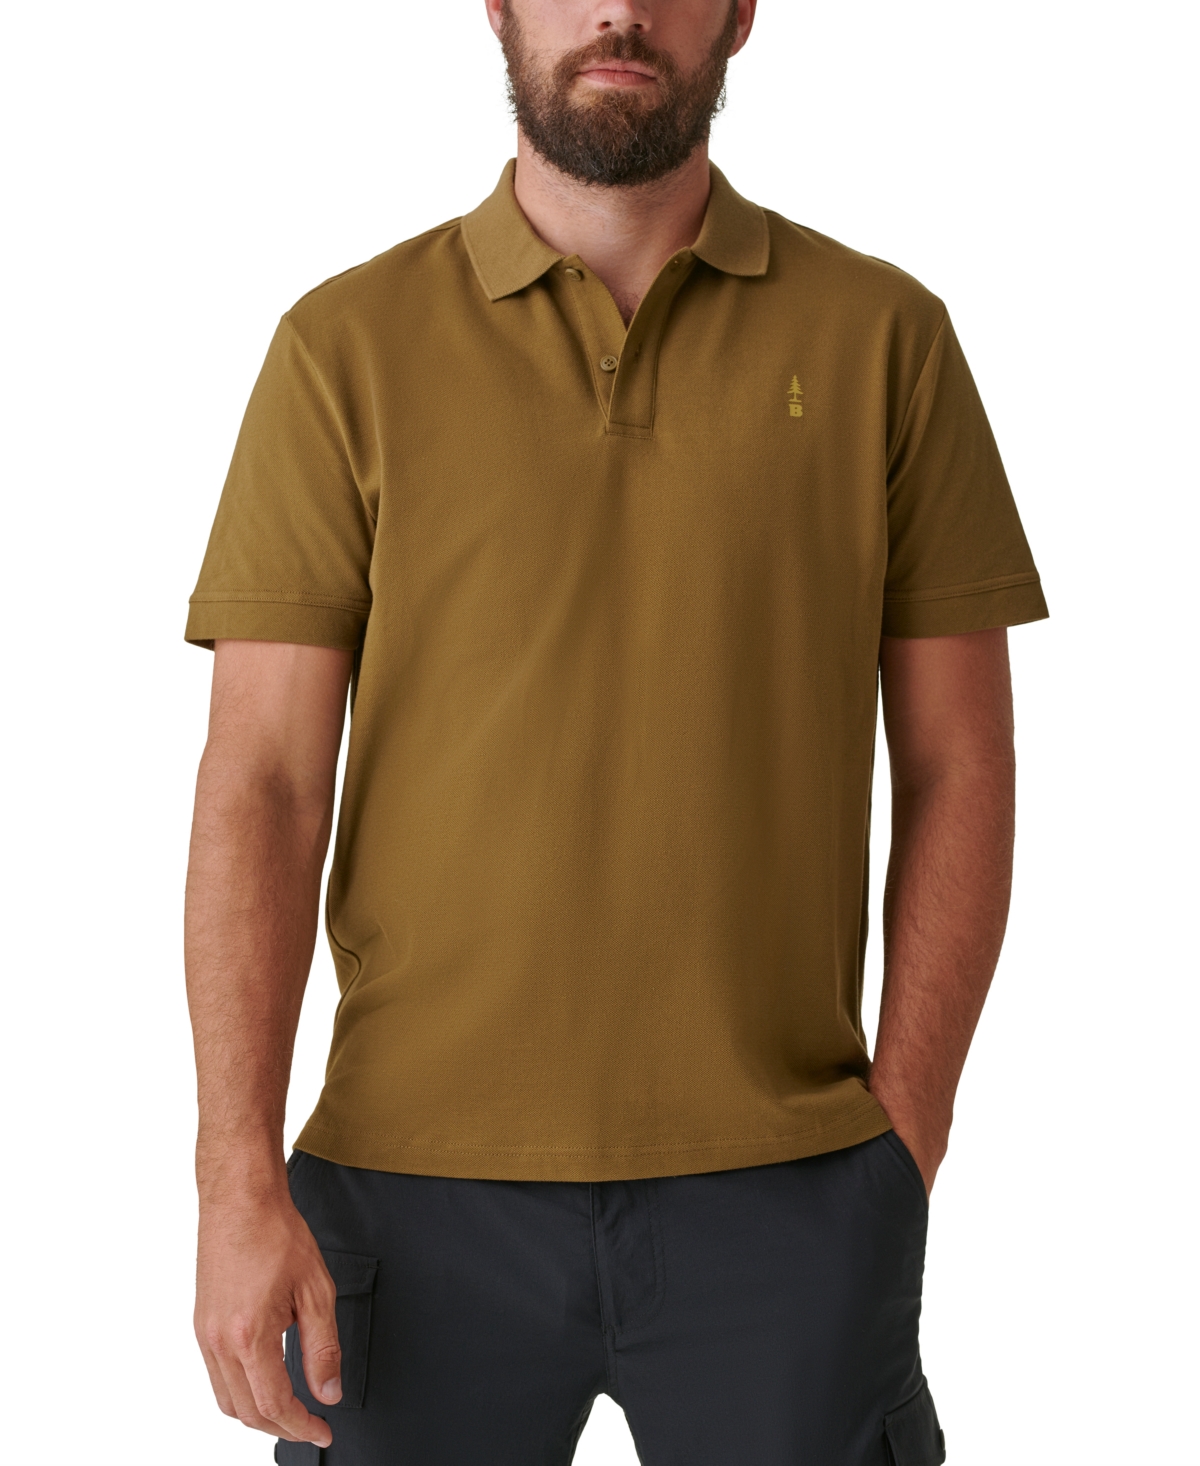 Kameel Respectvol Relatieve grootte Bass Outdoor Men's Exploration Polo Shirt In Military Olive | ModeSens